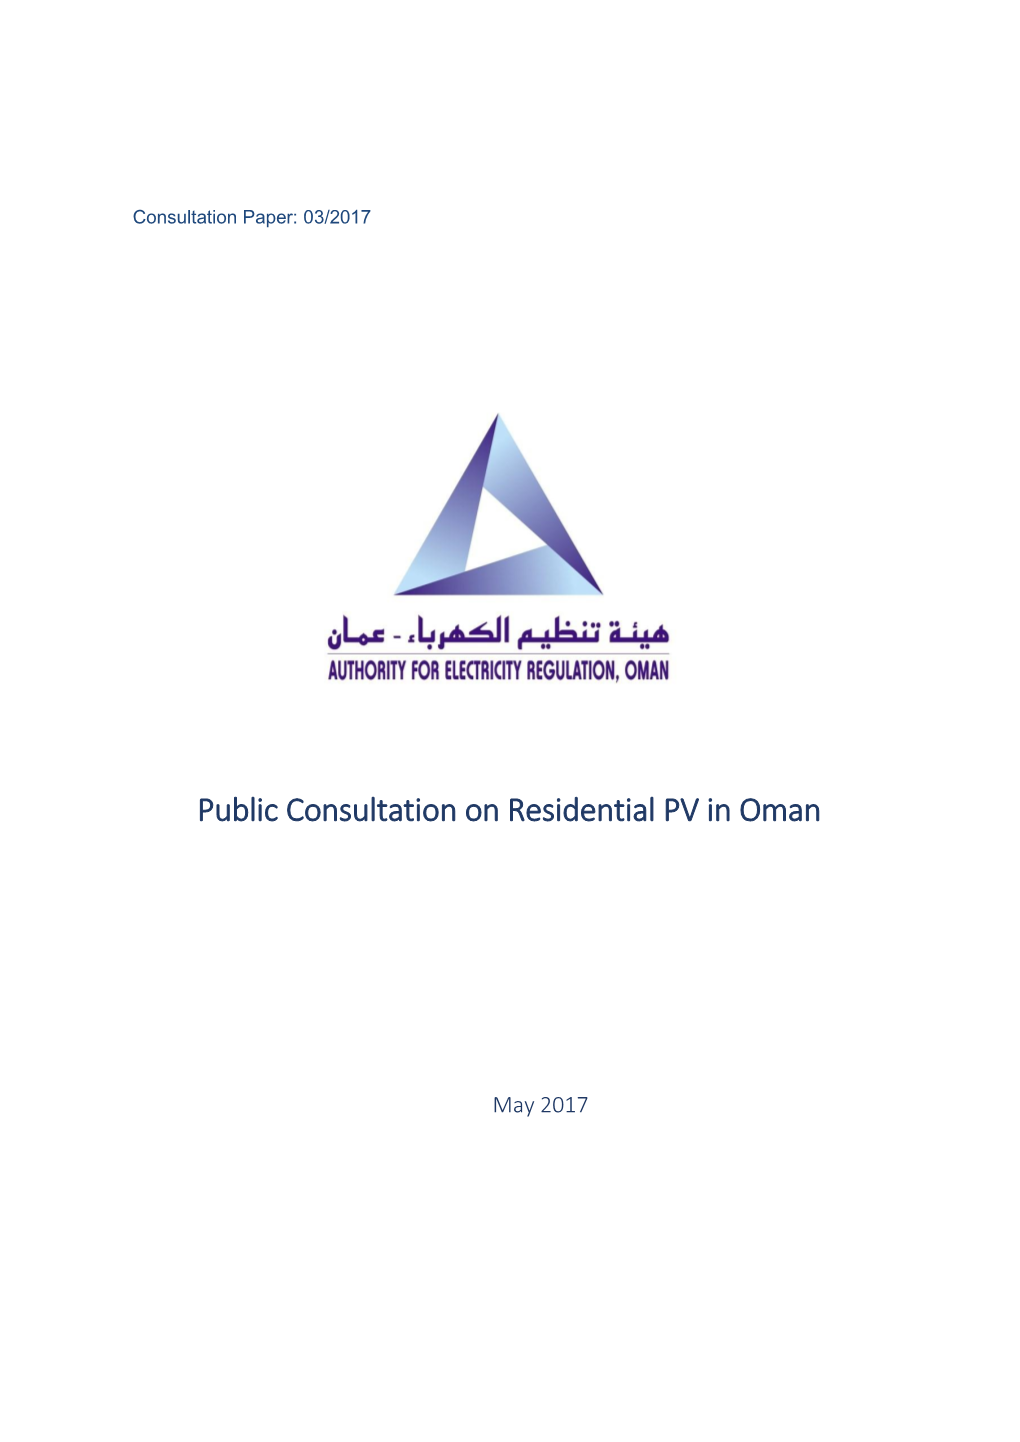 Residential PV in Oman